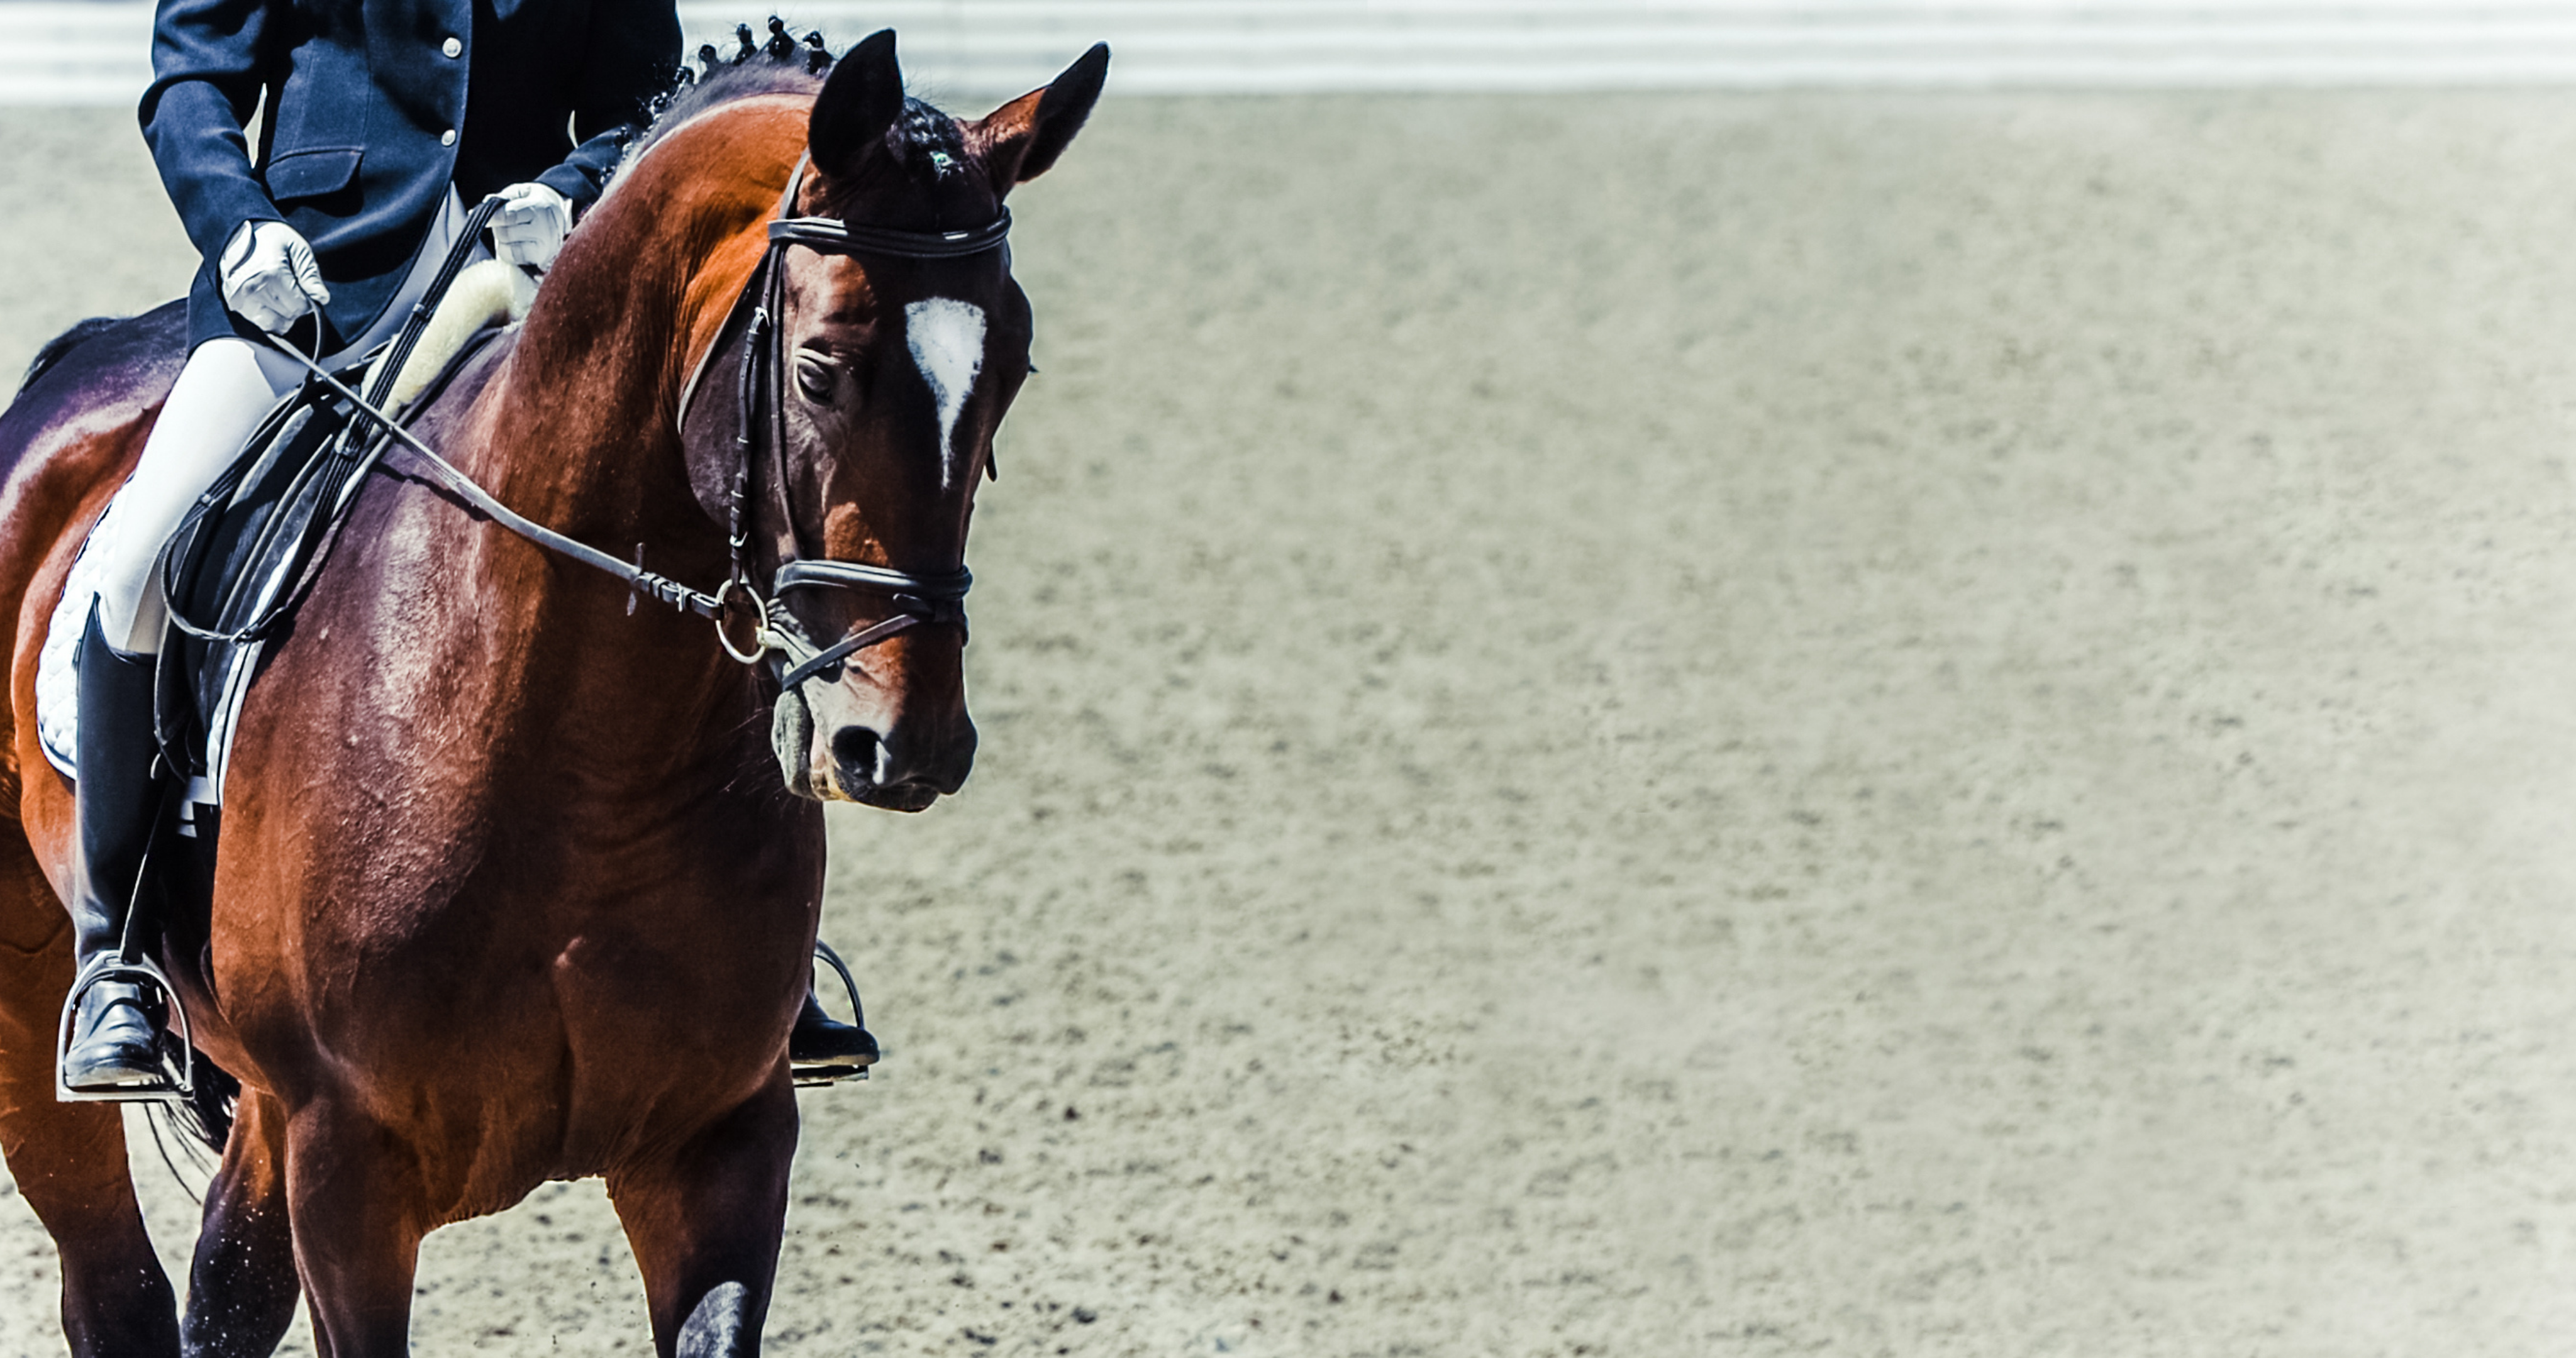 Trotting Horses and Bits Striped Equestrian Sports Bra